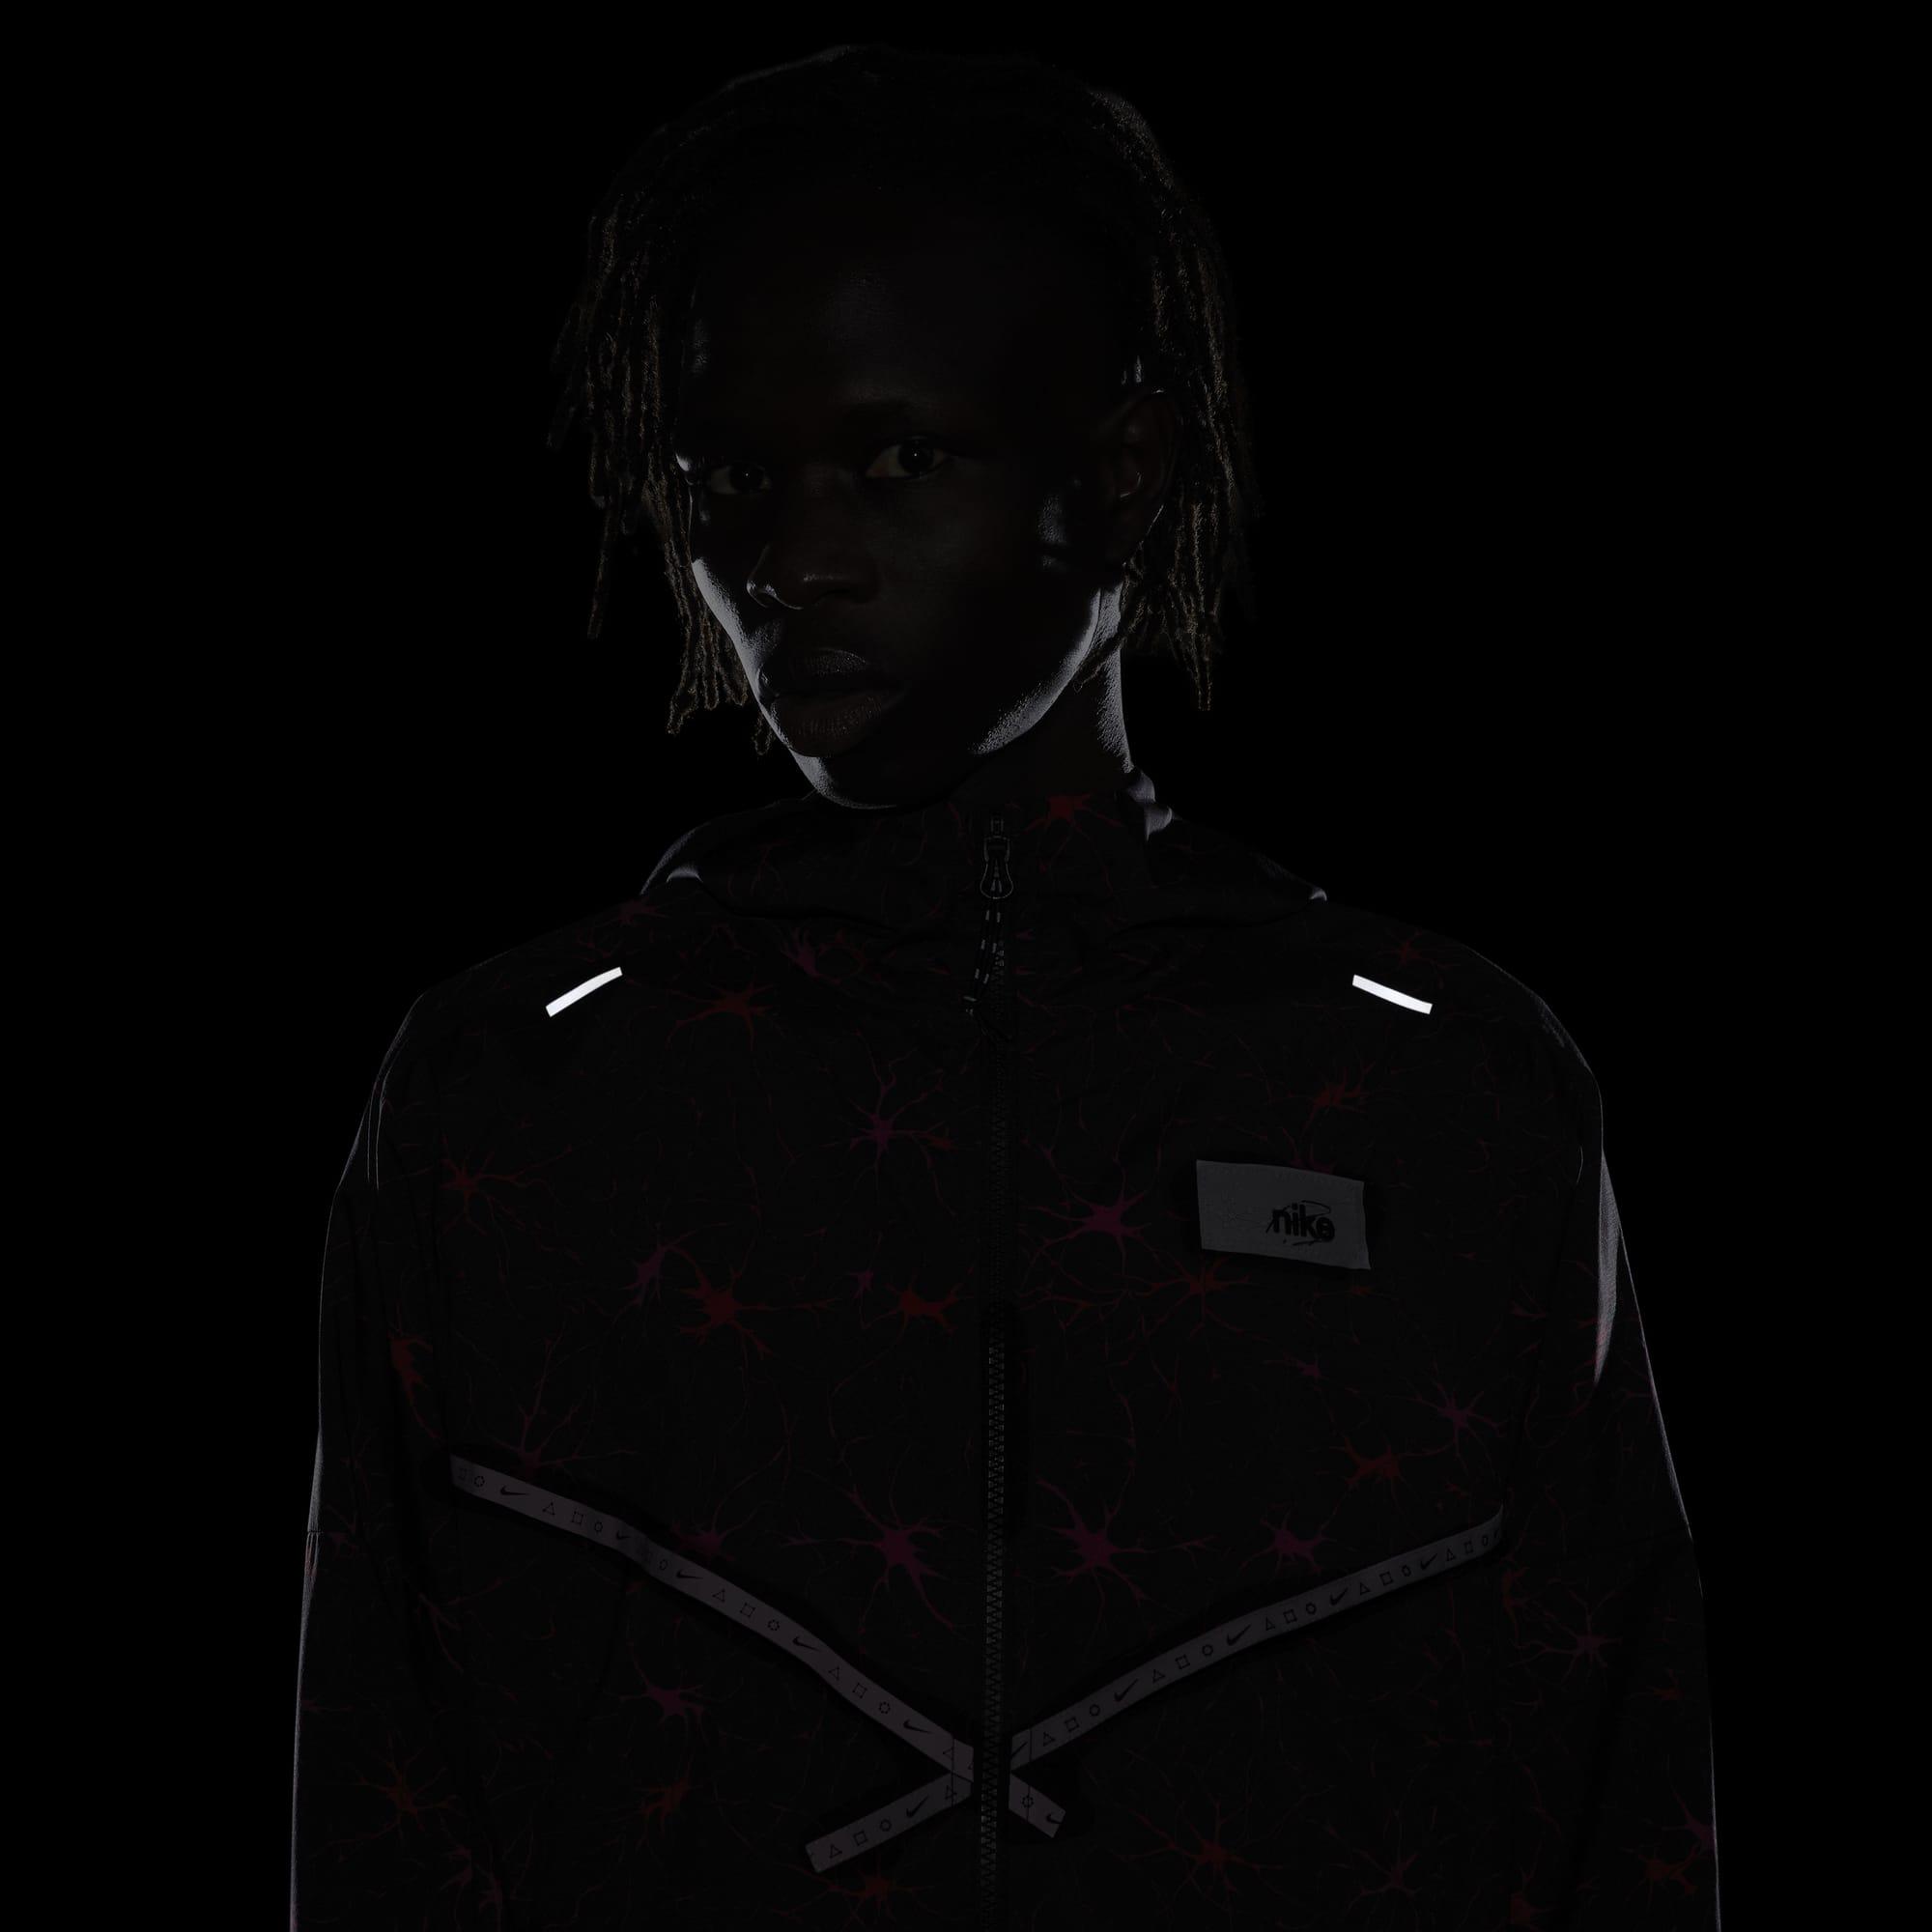 Nike Repel UV D.Y.E. Running Windrunner Jacket